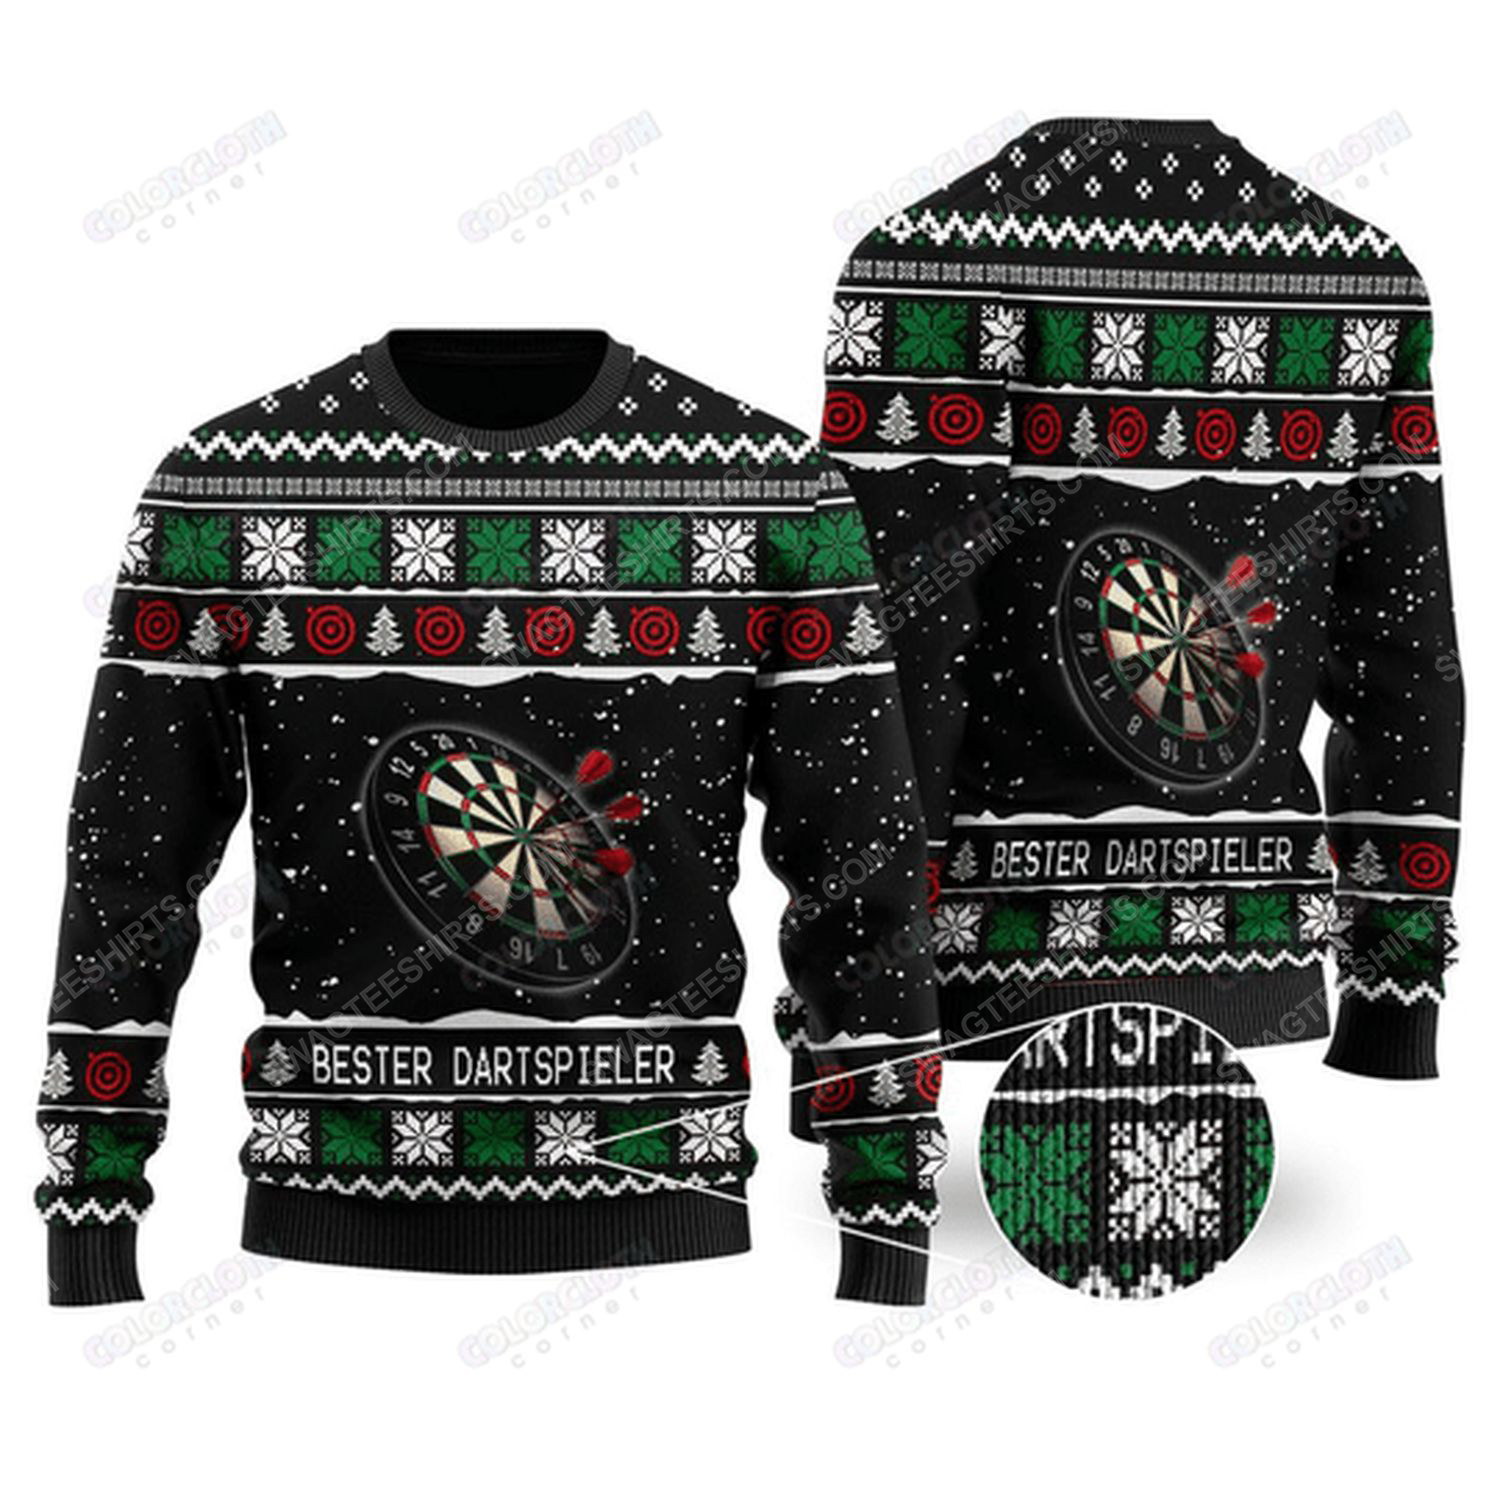 Bester dark spieler ugly christmas sweater